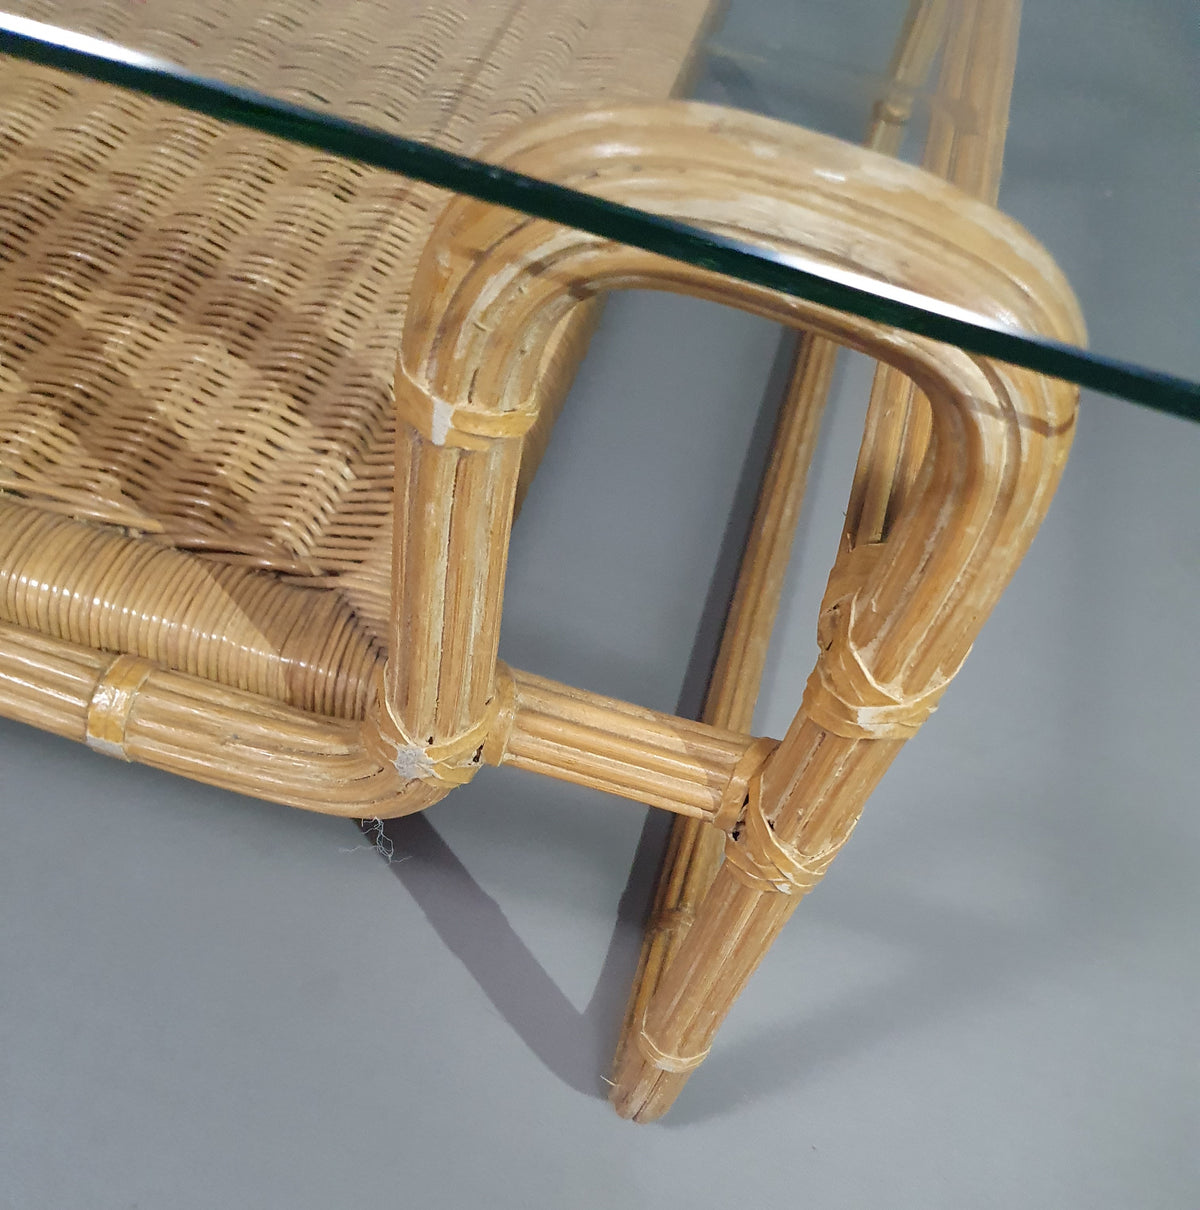 Mid Century coffee table. Iron frame / pencil reed / split reed / rattan
75 x 75 x 40 cm